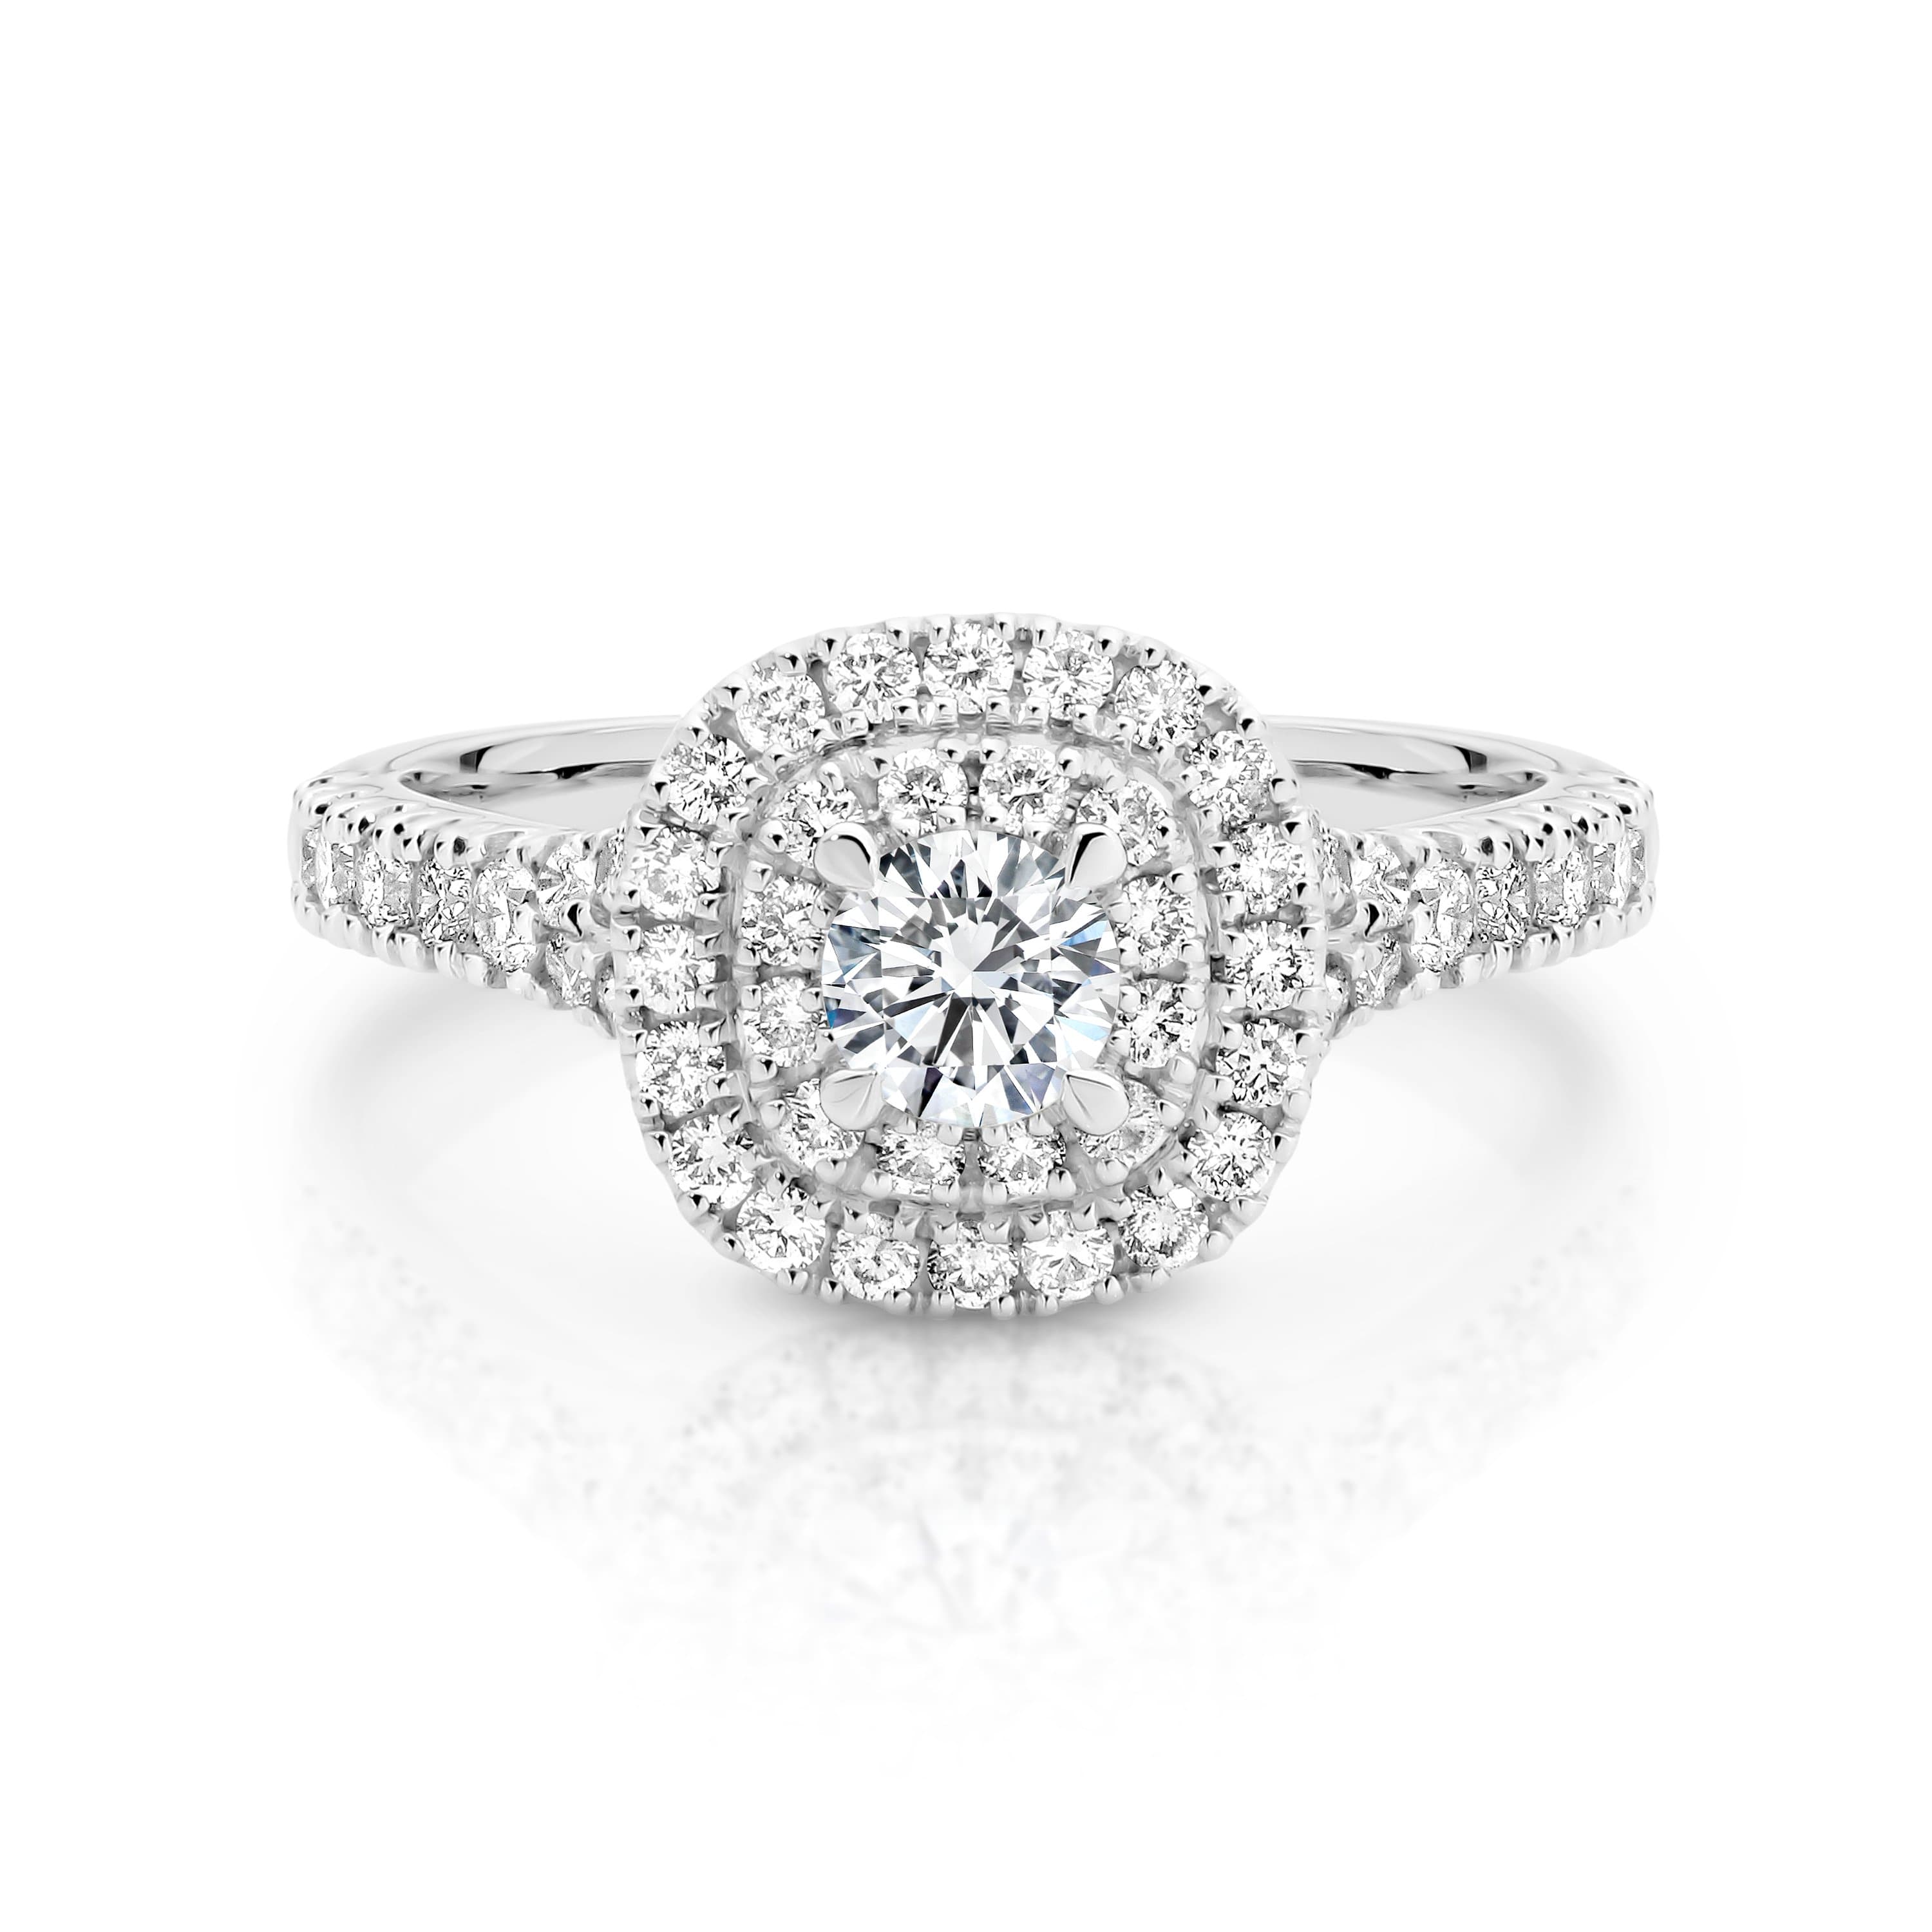 Aurora | Cushion Shaped Double Halo Diamond Engagement Ring with Shoulder Stones